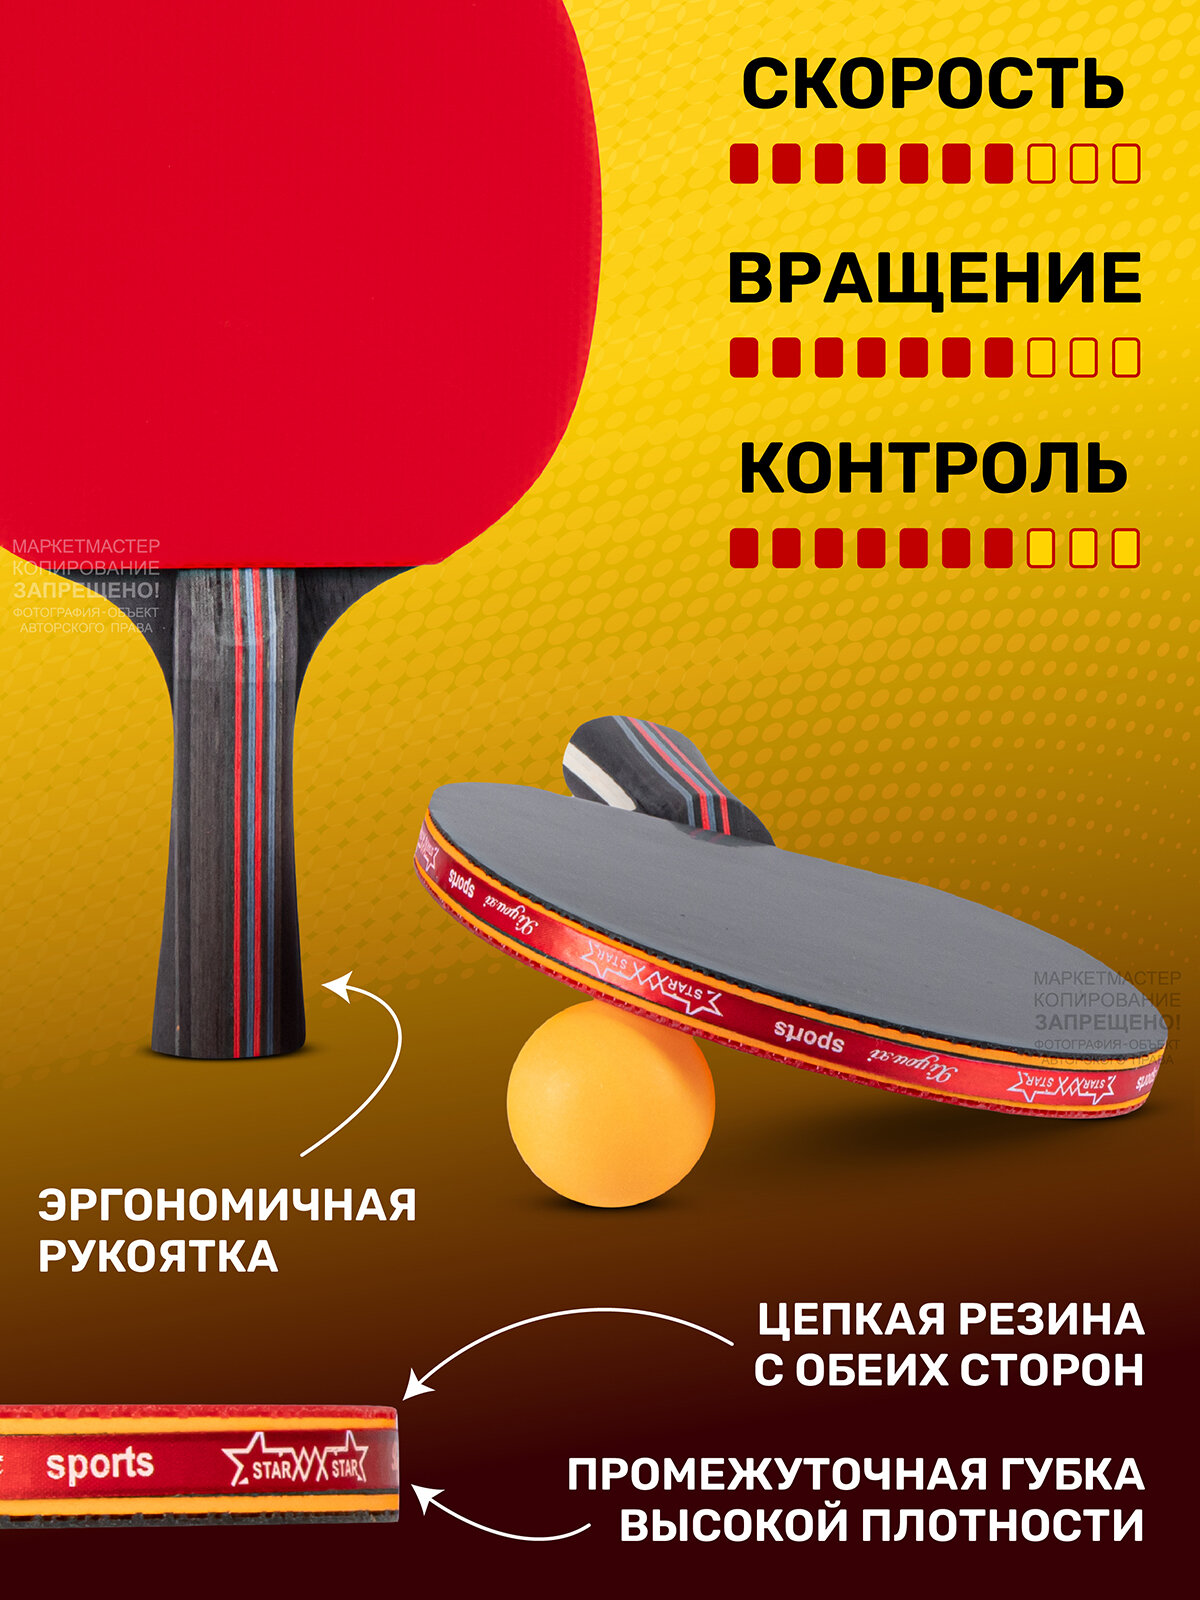 Набор для настольного тенниса ТМ CR, ракетки 5*, 3 шарика, в сумке, JB1000470